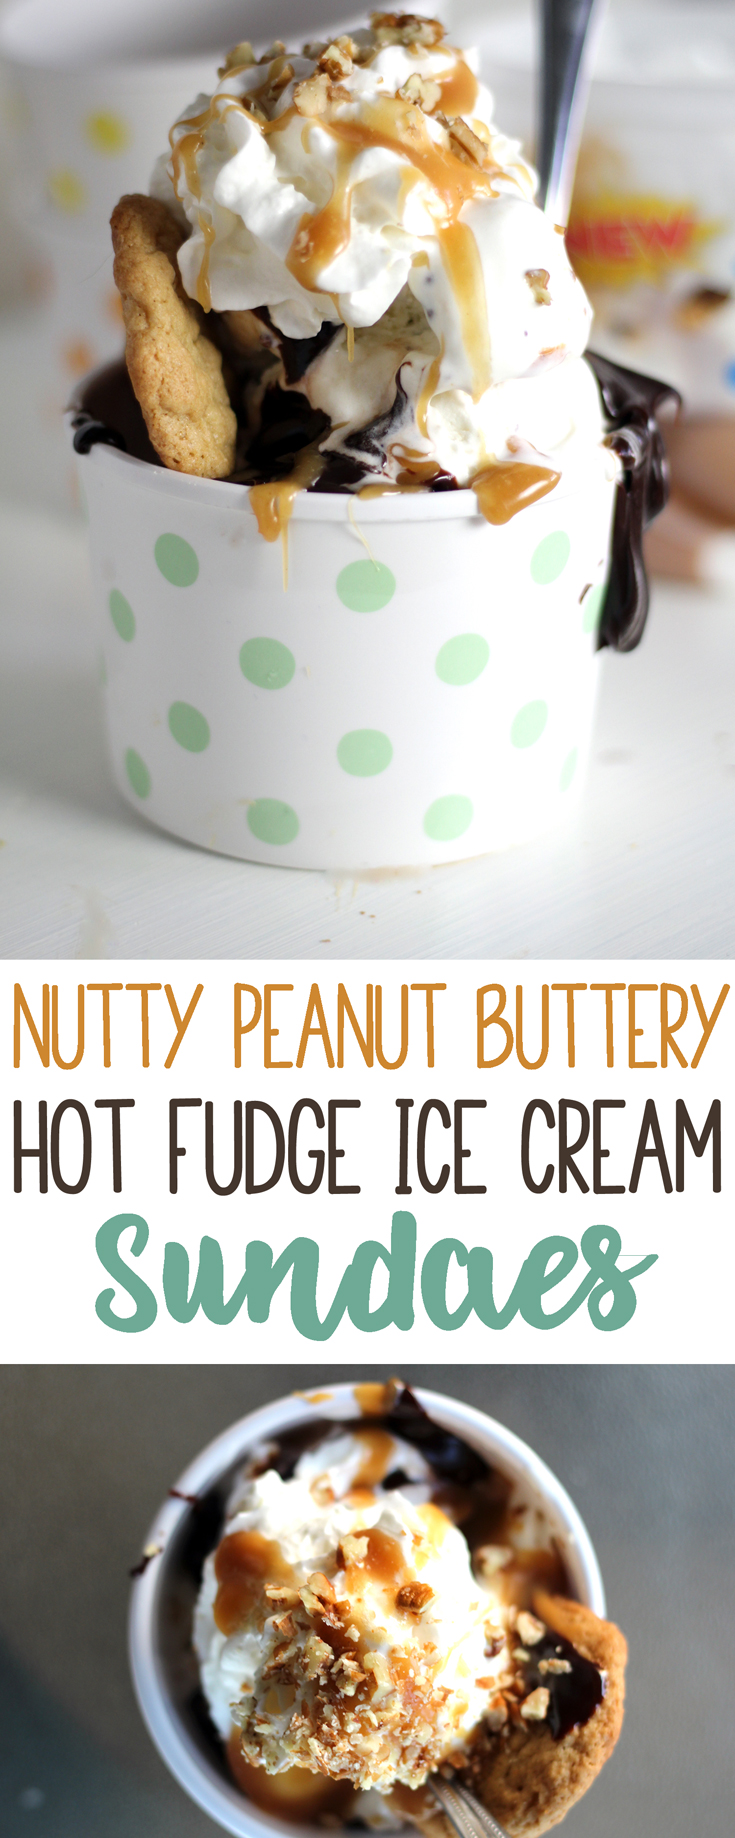 Peanut Buttery Hot Fudge Ice Cream Sundaes | Buy This Cook That